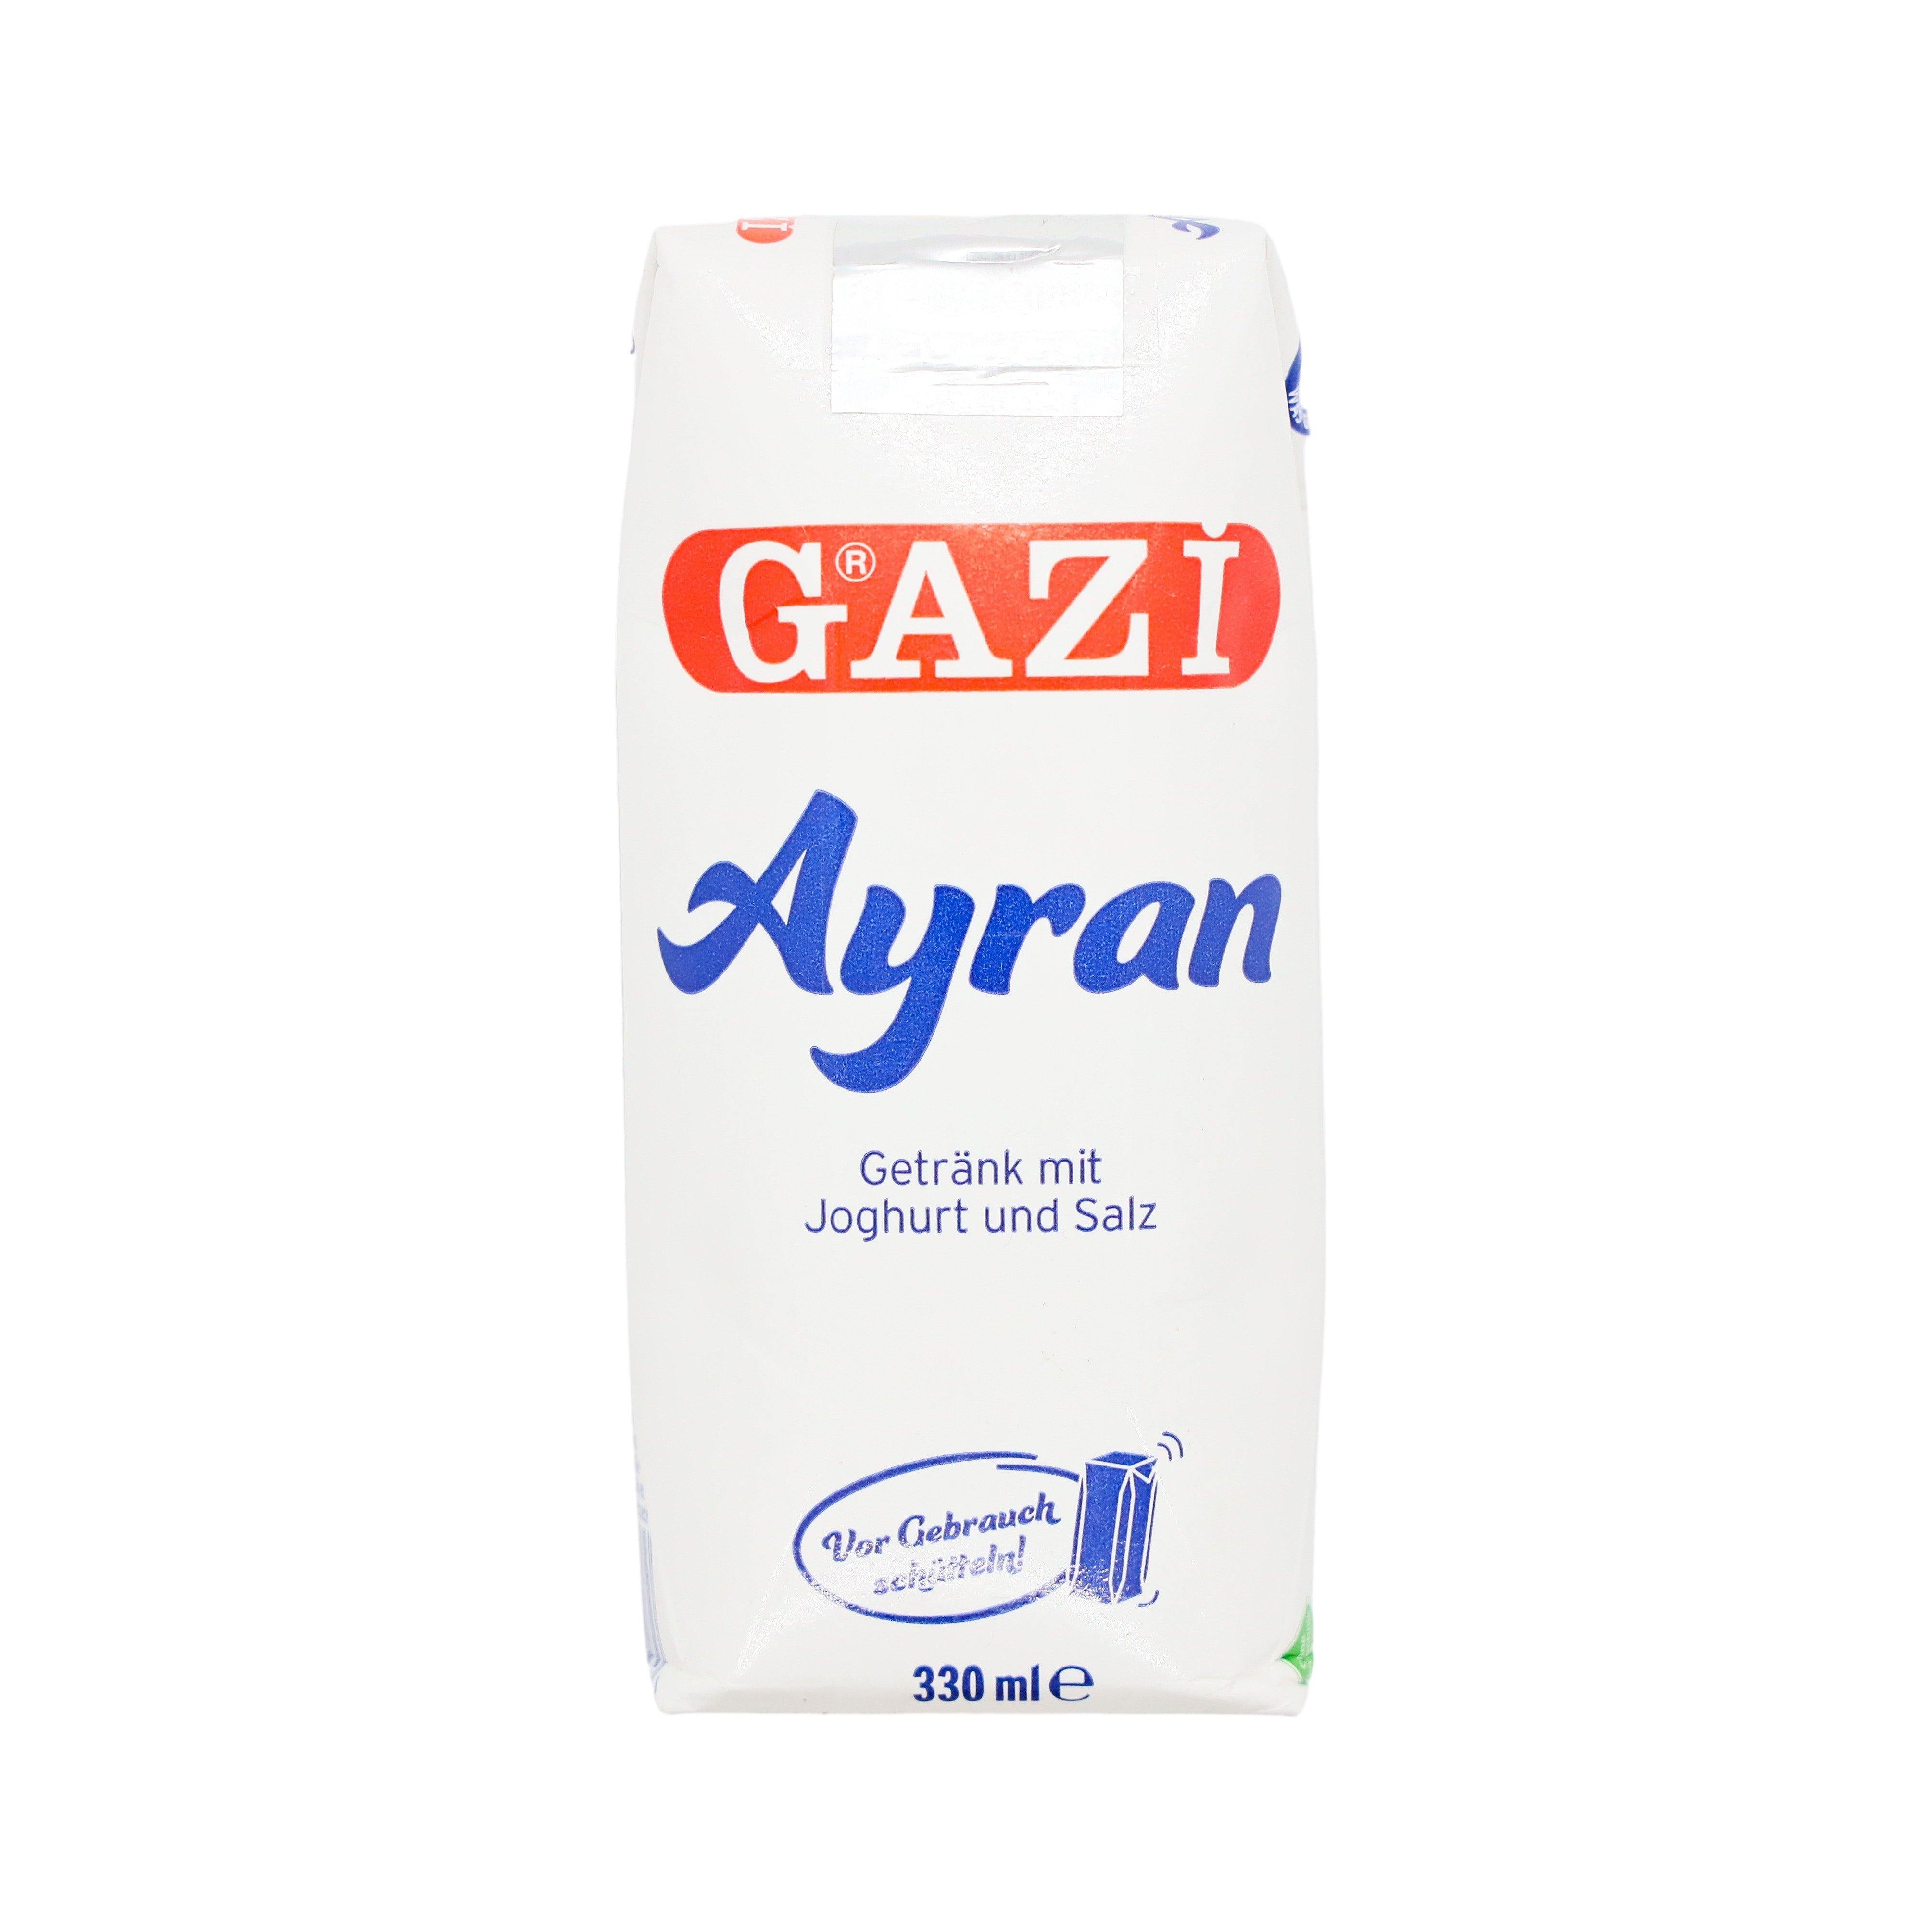 Gazi ayran yoghurt drink SaveCo Online Ltd